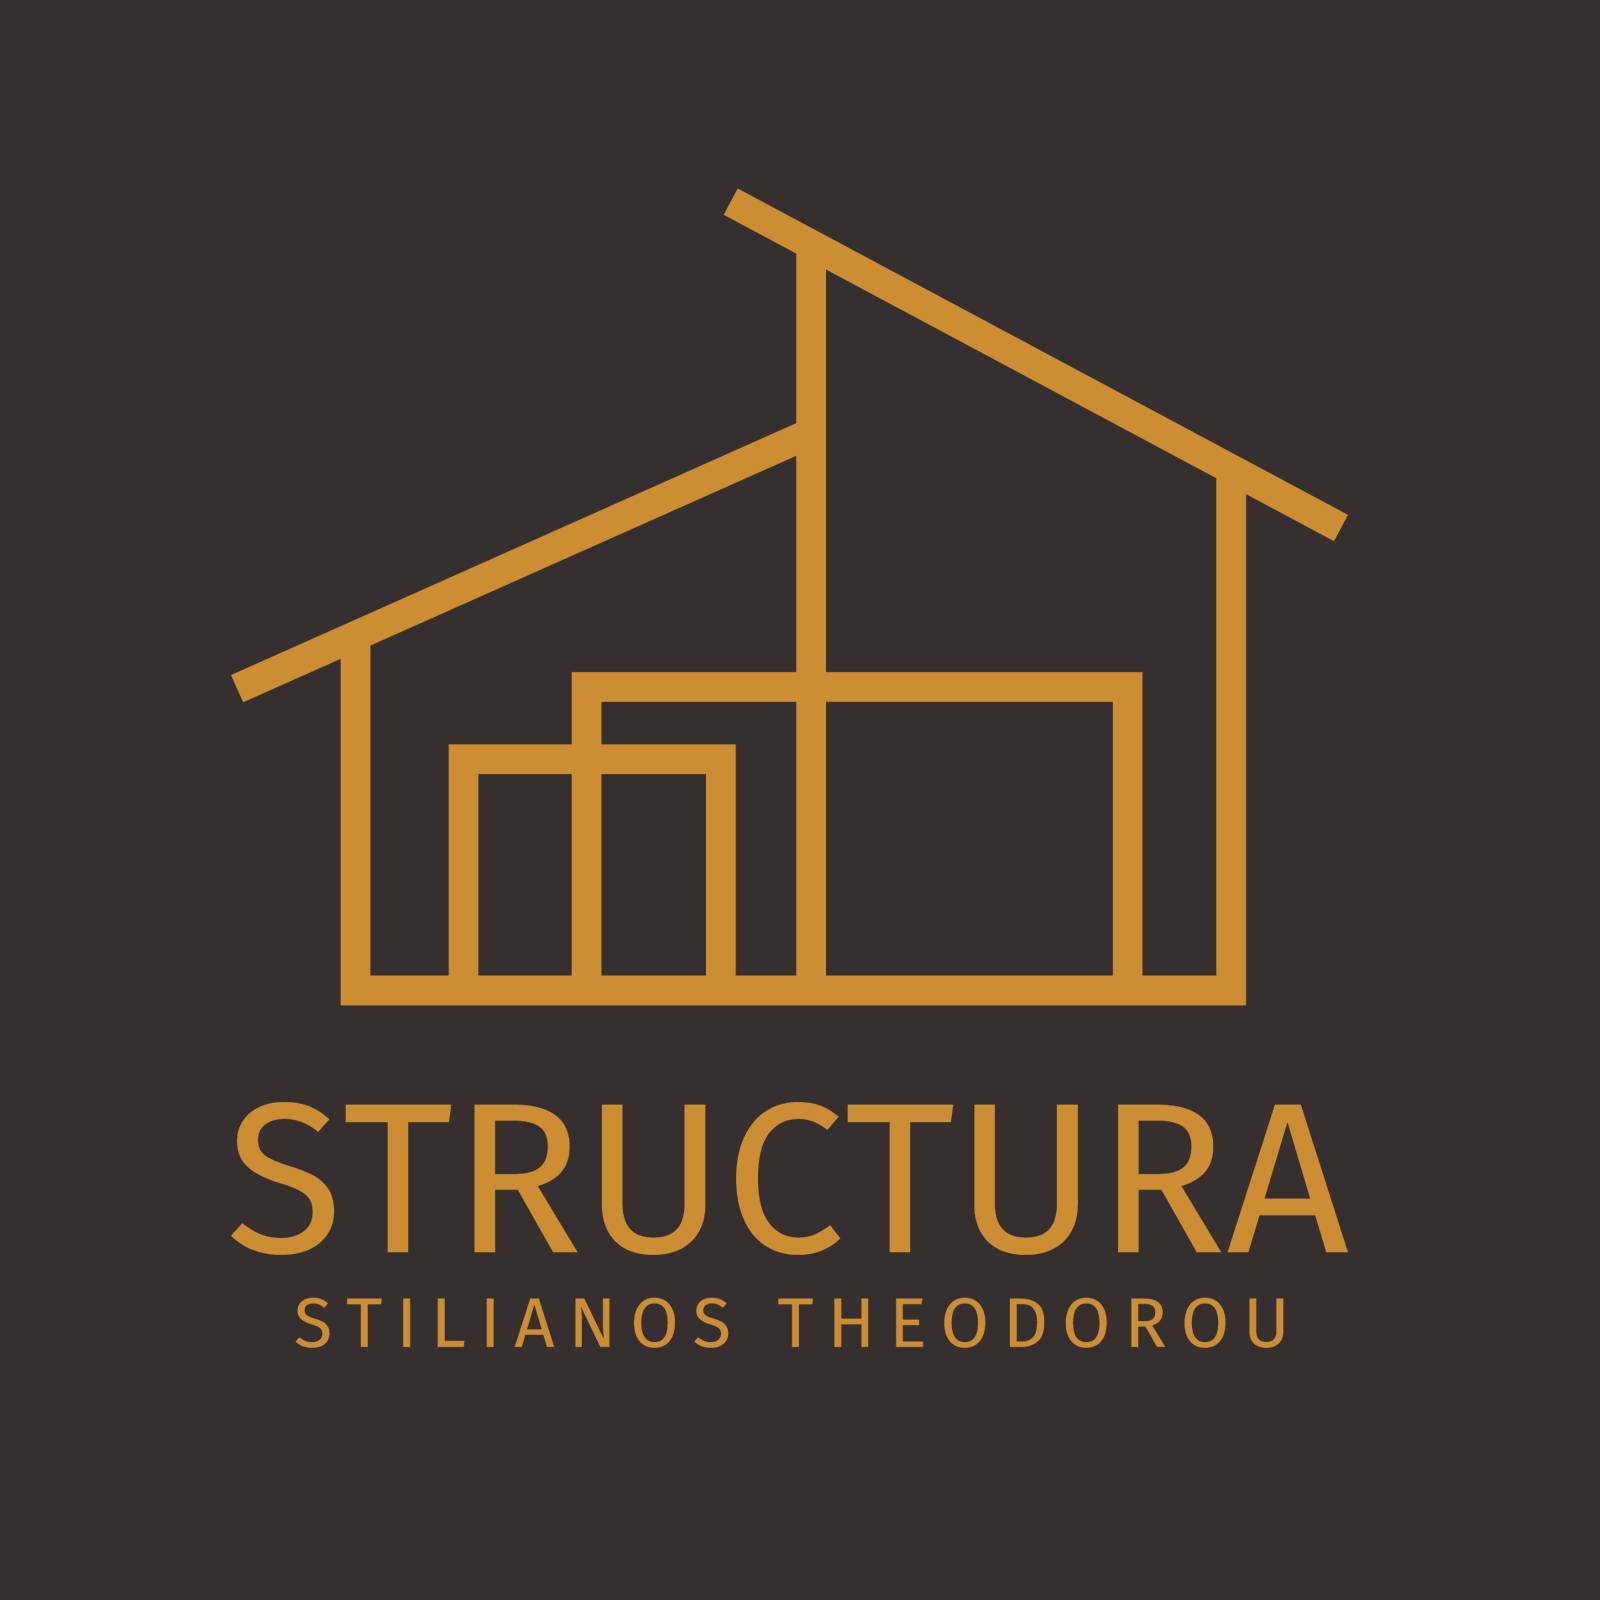 Structura – Stilianos Theodorou